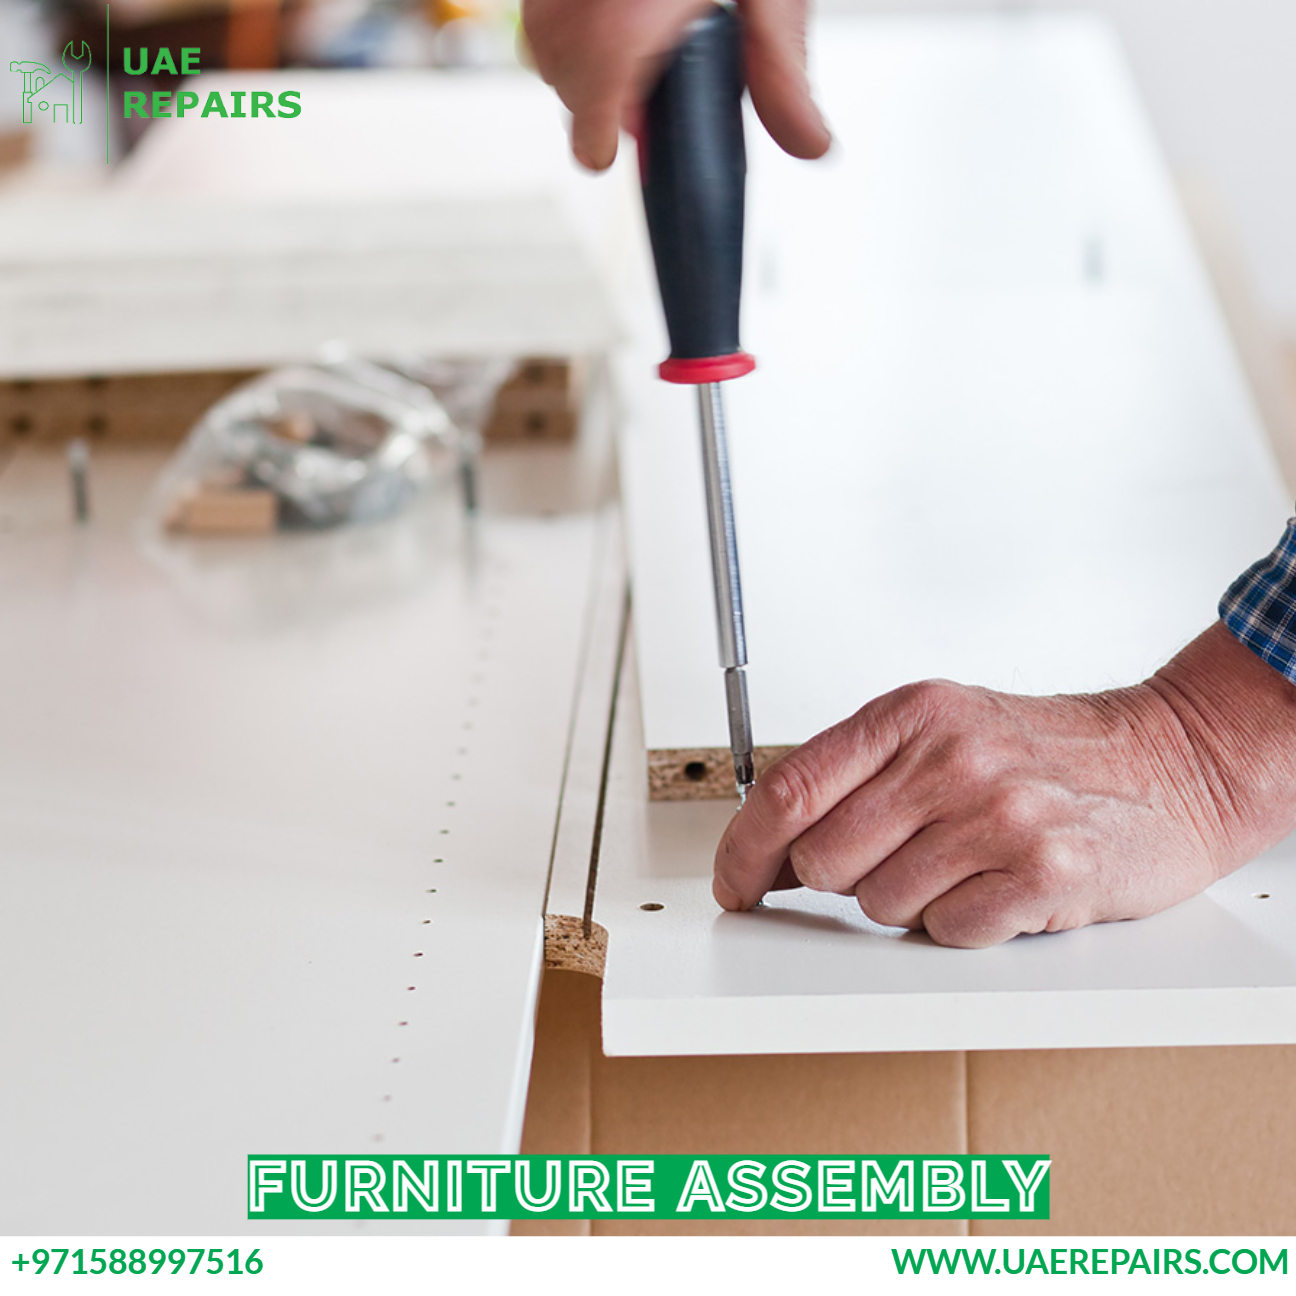 UAE REPAIRS Furniture assembly TEAM